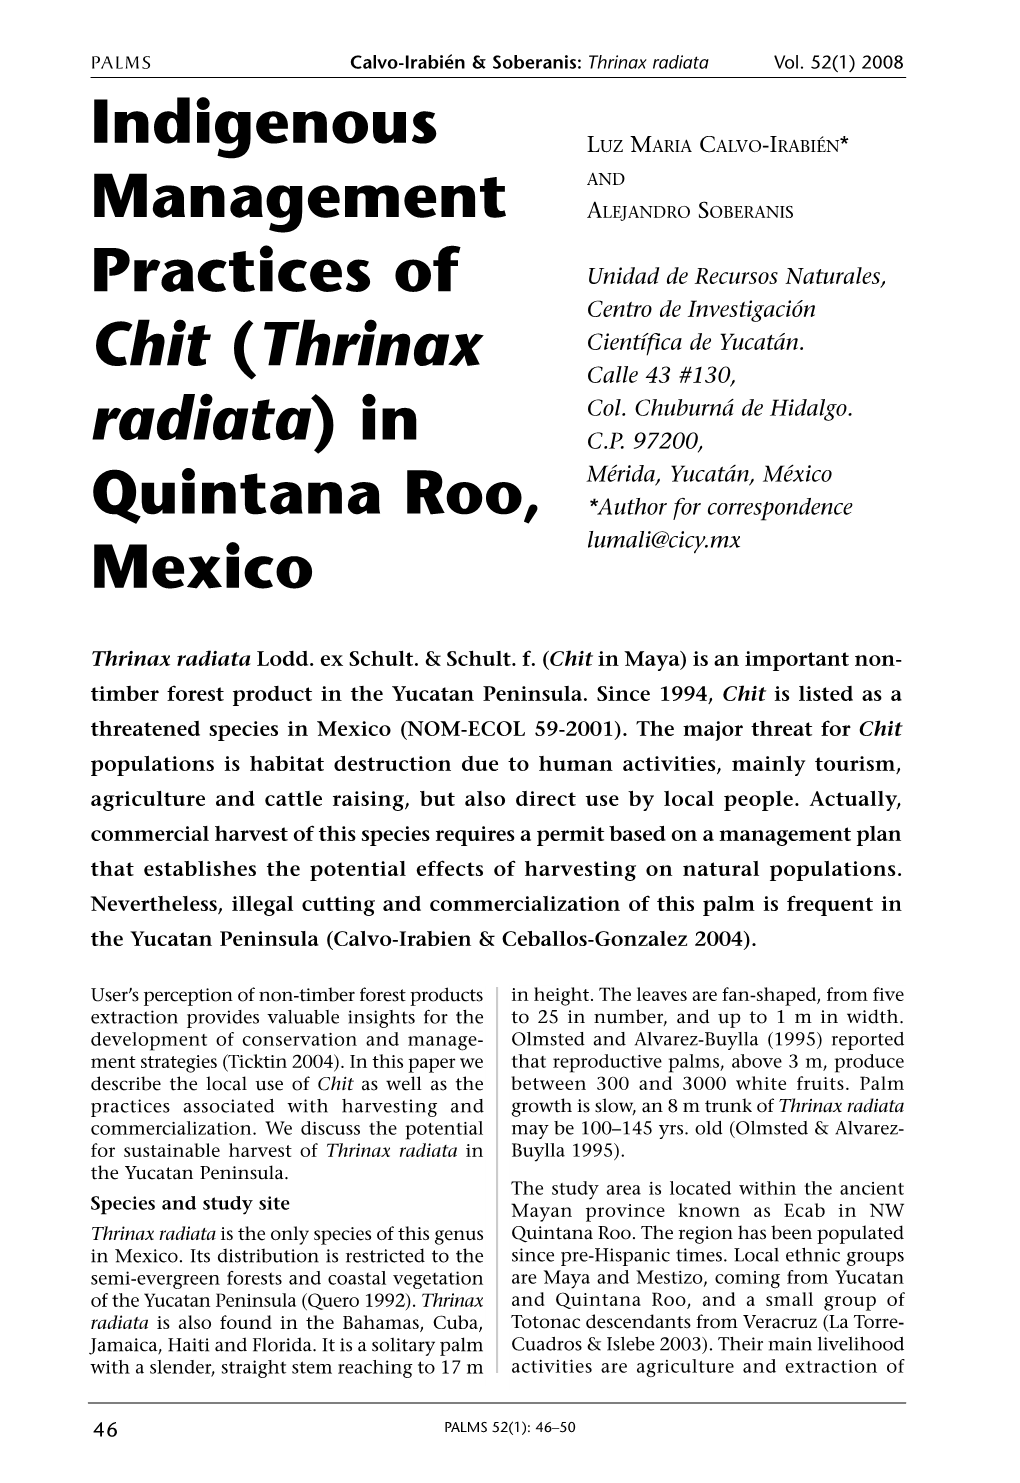 Indigenous Management Practices of Chit (Thrinax Radiata) in Quintana